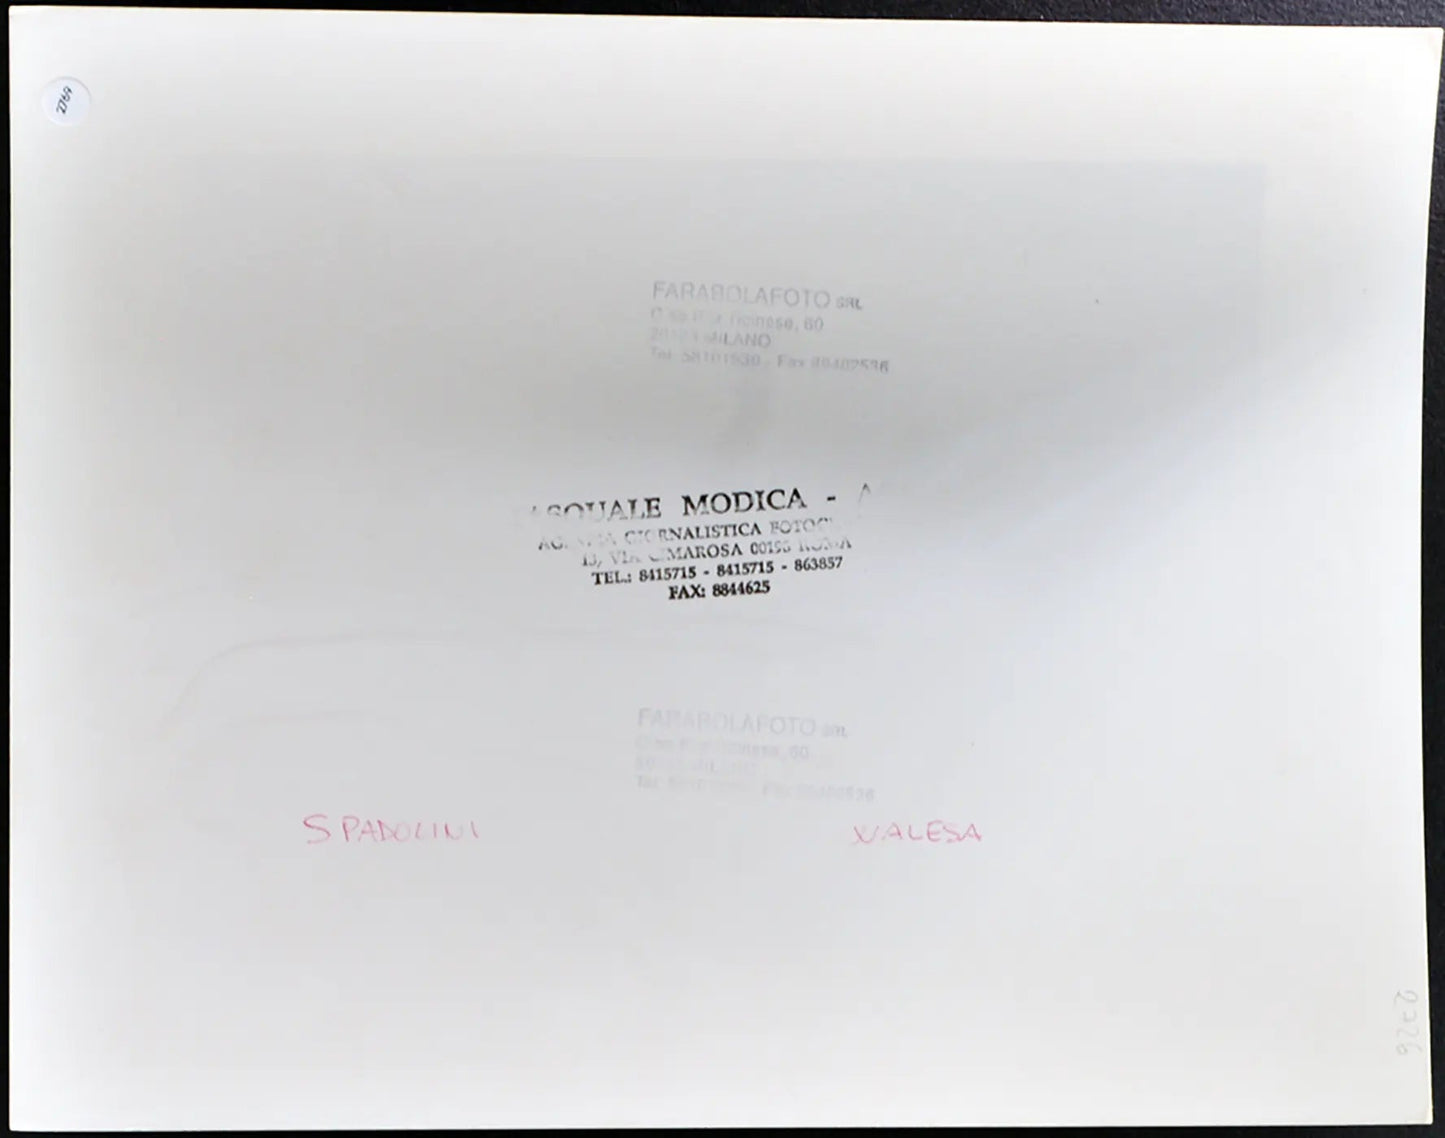 Spadolini e Lech Walesa anni 90 Ft 2769 - Stampa 24x30 cm - Farabola Stampa ai sali d'argento